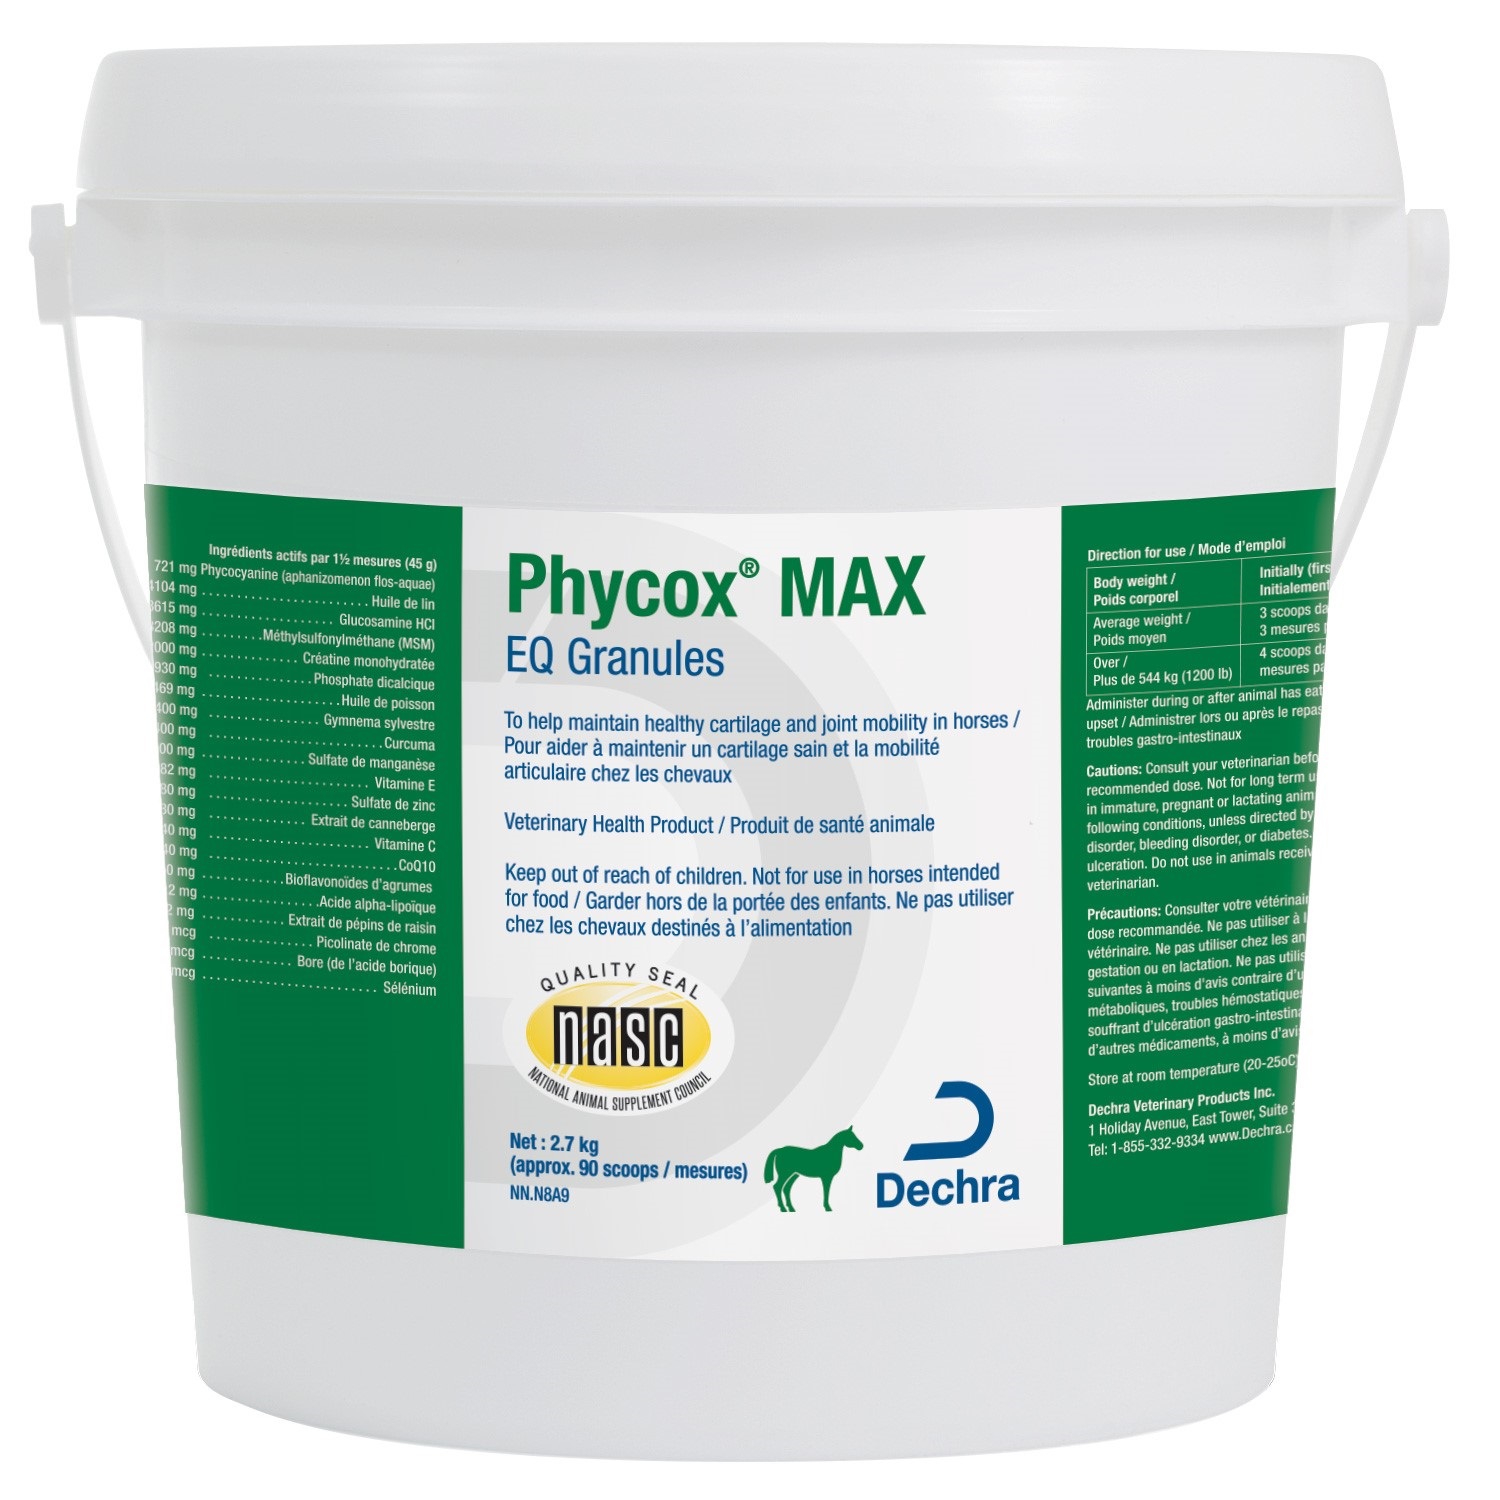 Dechra Phycox MAX EQ Granules